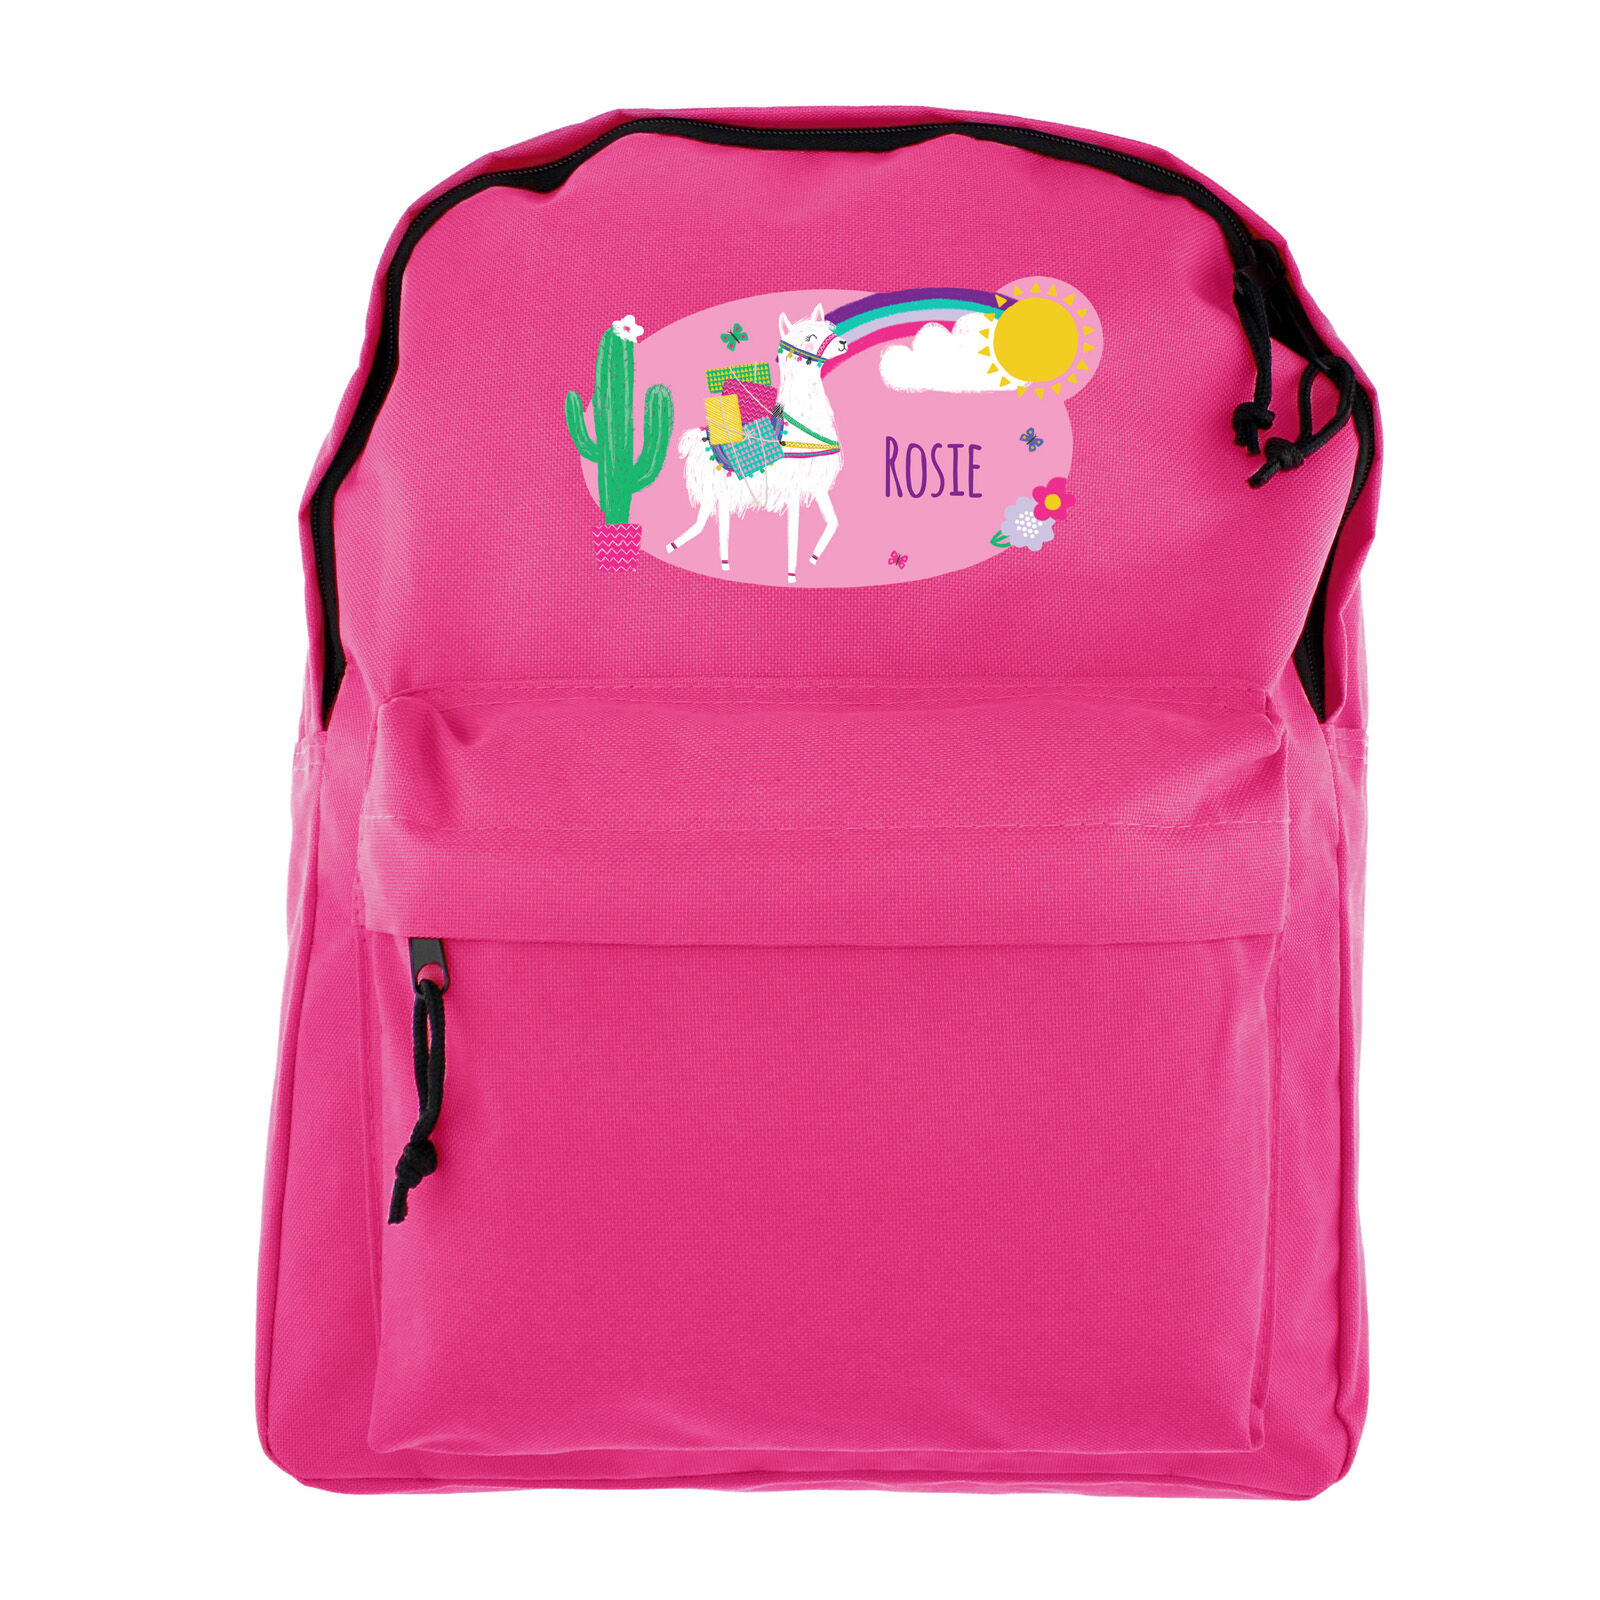 Personalised Llama Kids Gift Tote Bag School Bag Nursery Bag Kids Tote Llama Birthday Gift Childs Name Bag Llama Gift